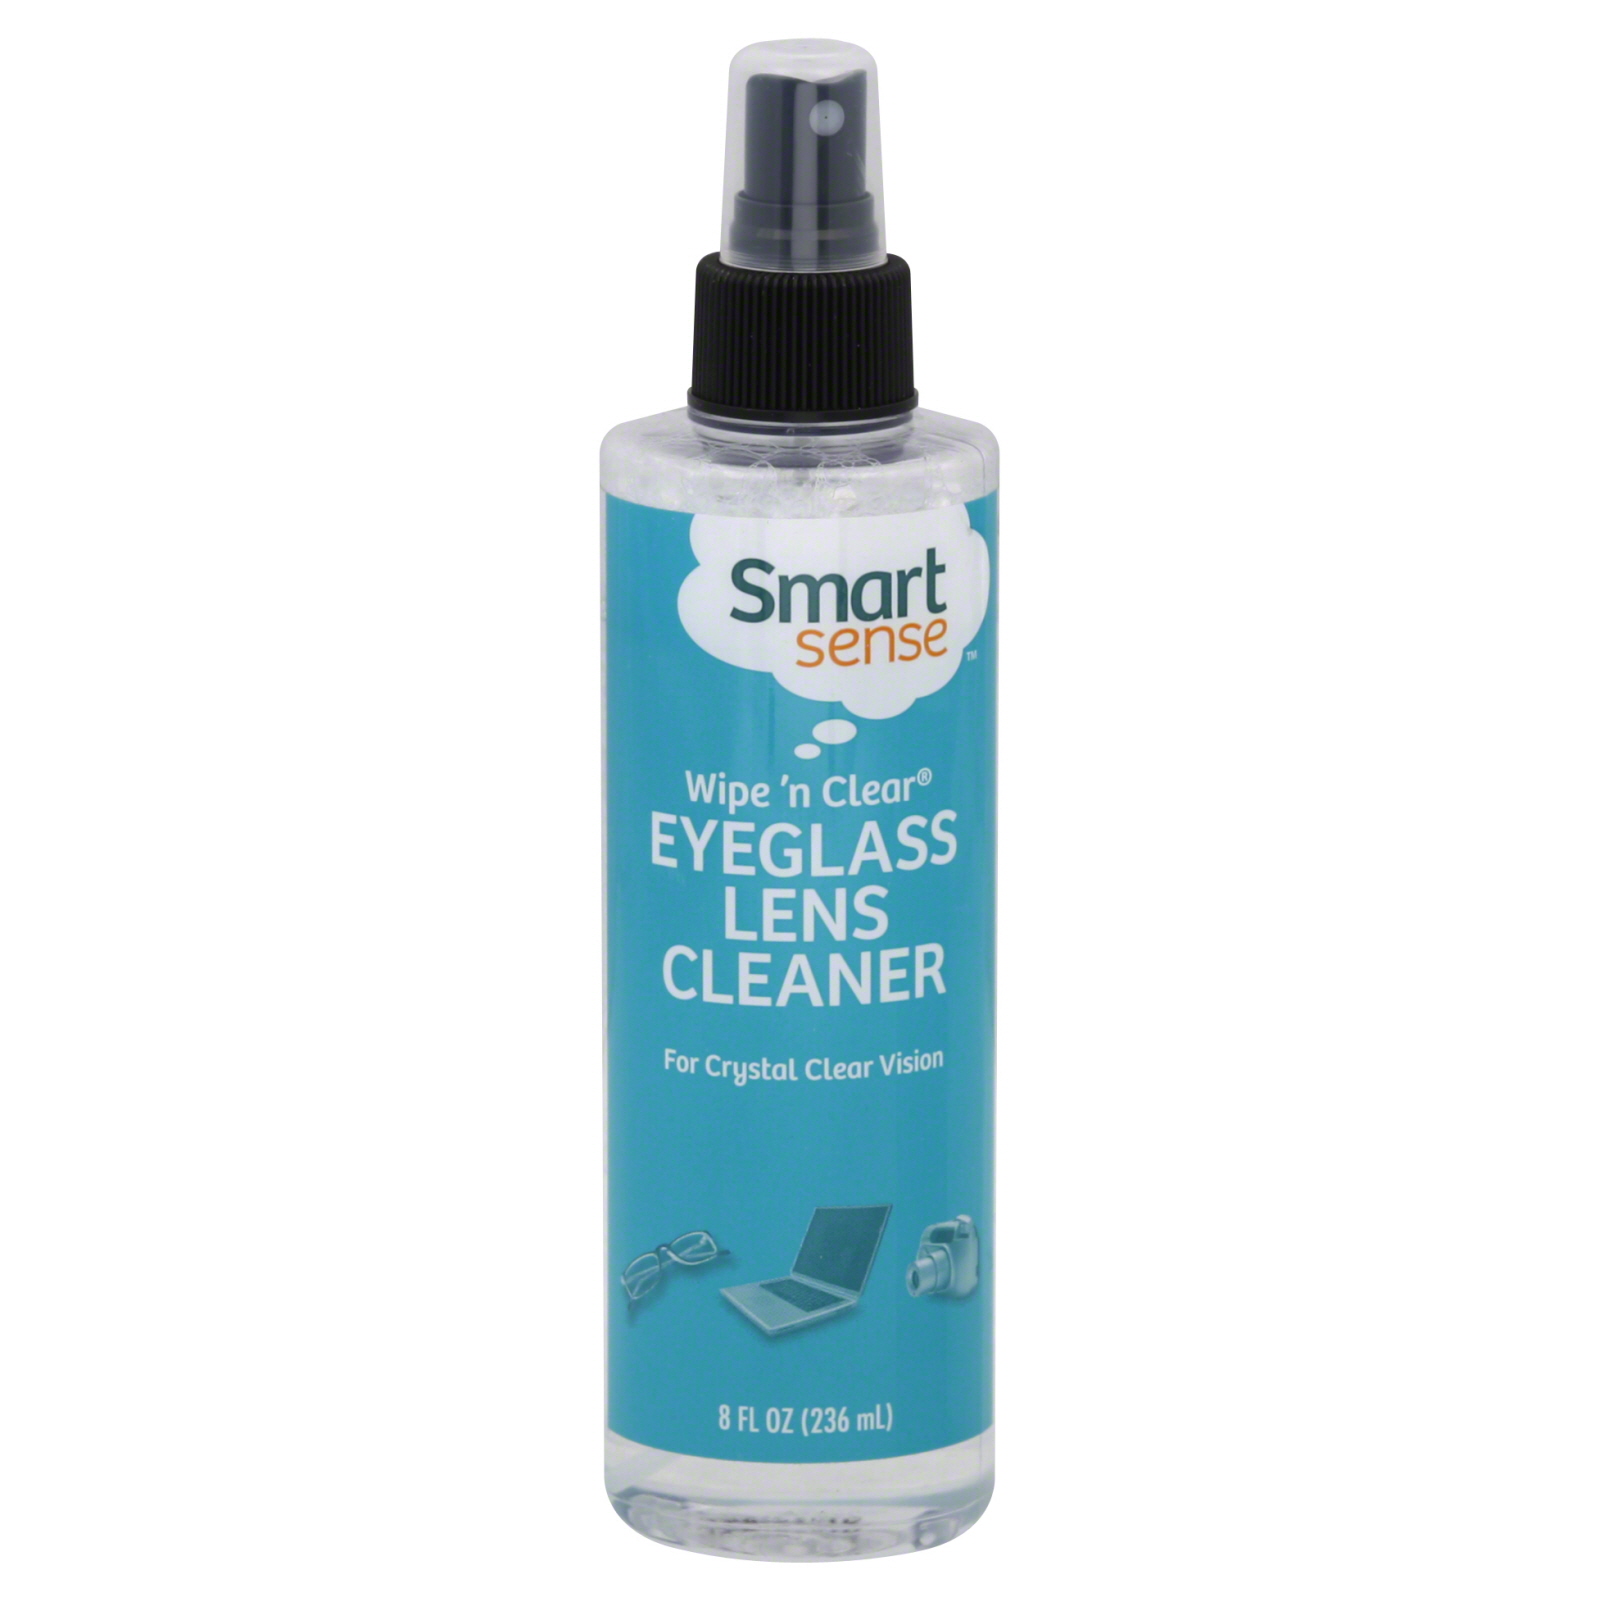 Smart Sense Eyeglass Lens Cleaner, Wipe 'n Clear 8 fl oz (236 ml)